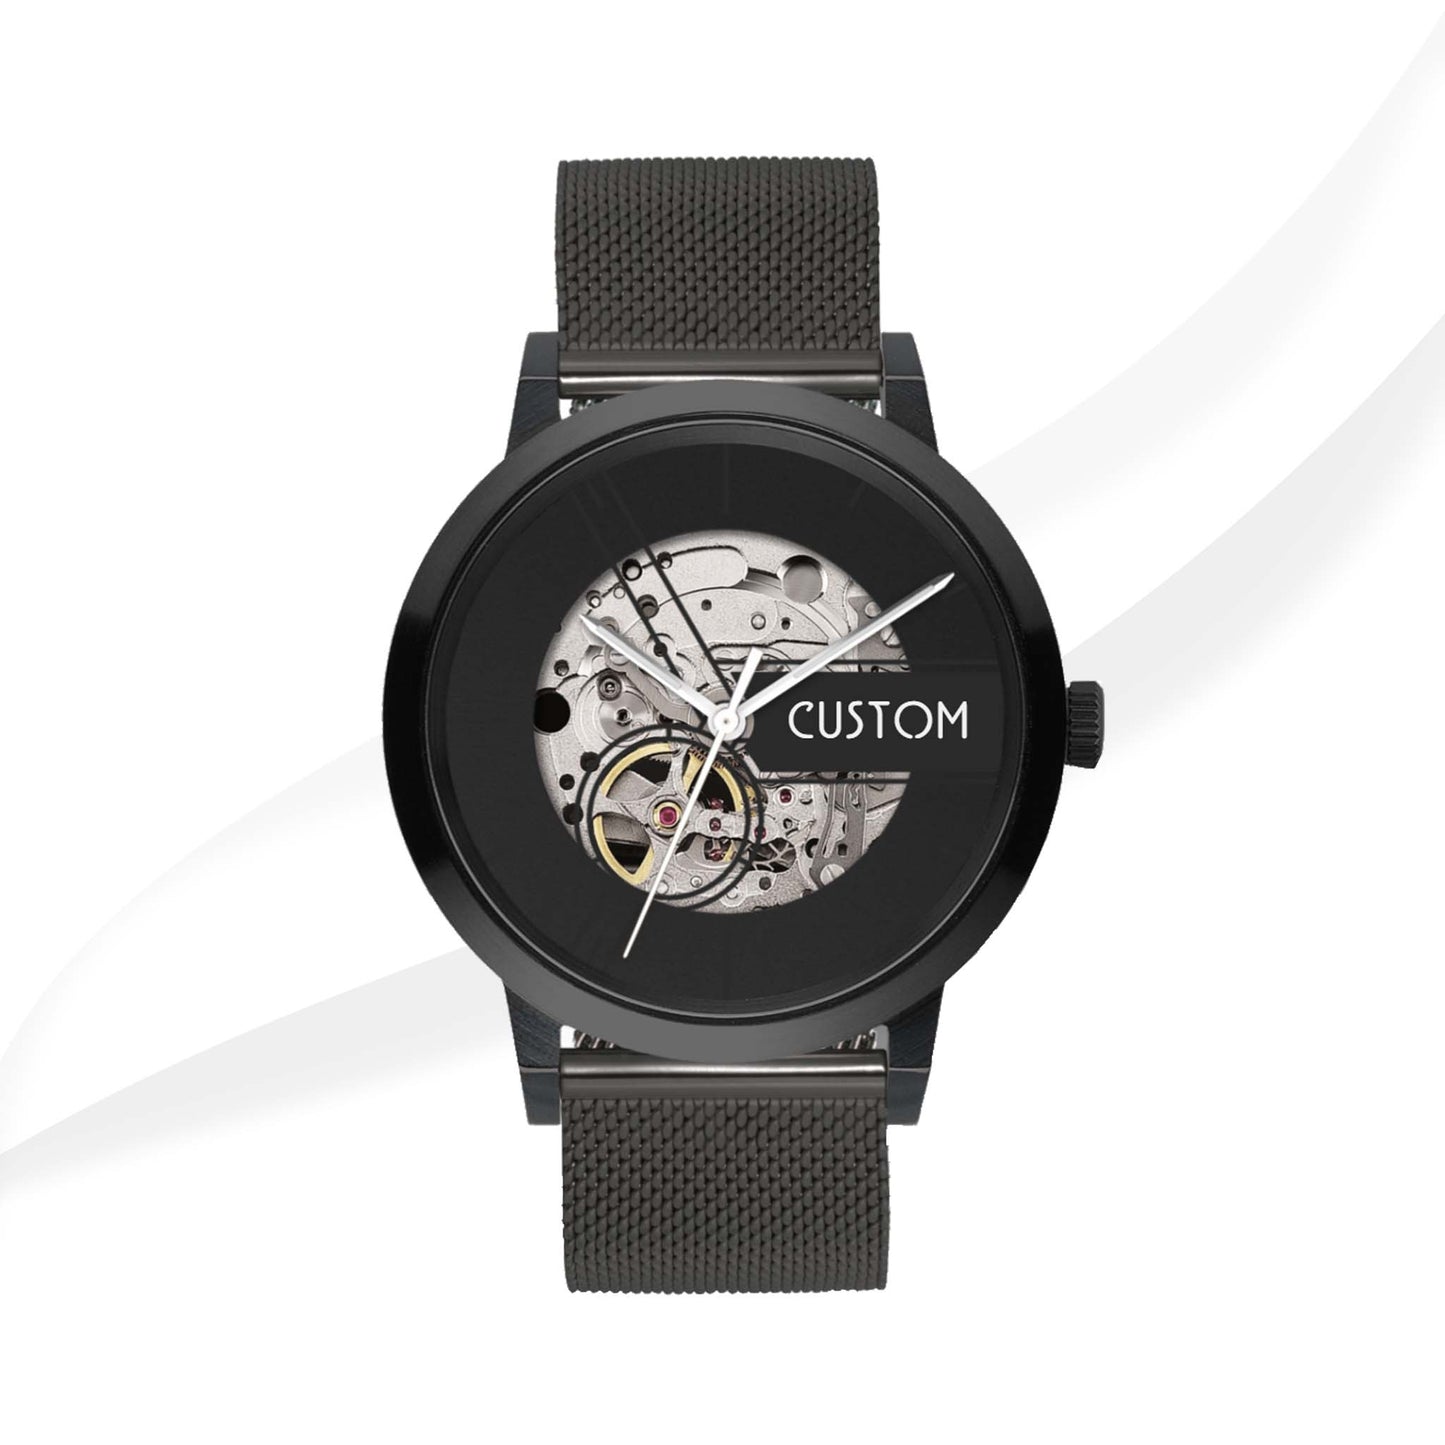 EONIQ custom skeleton watch - all black